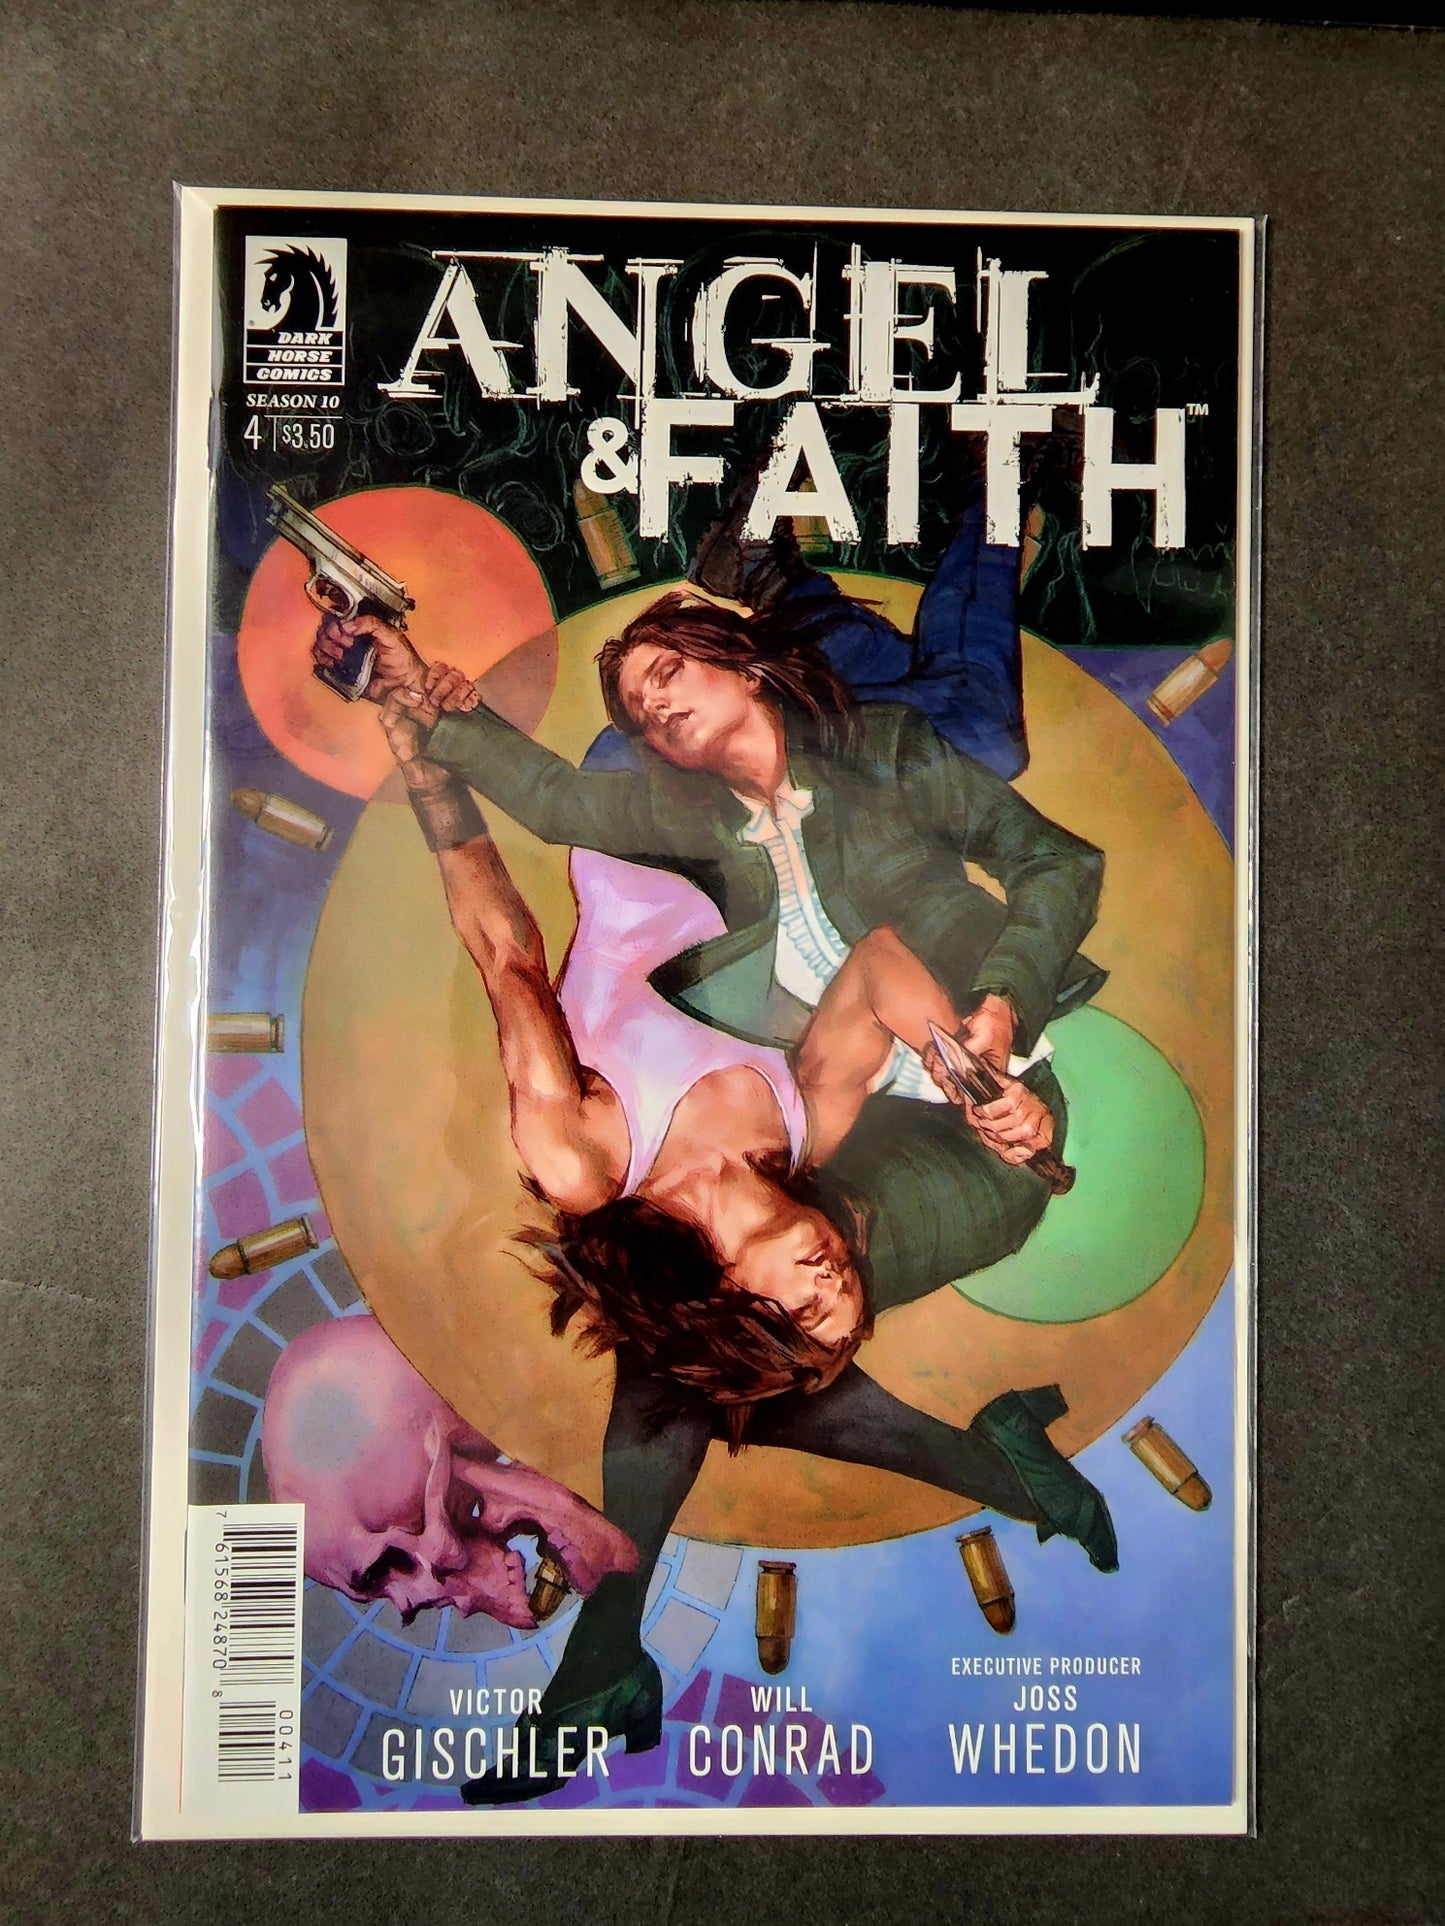 Angel & Faith Season 10 #4 (NM-)